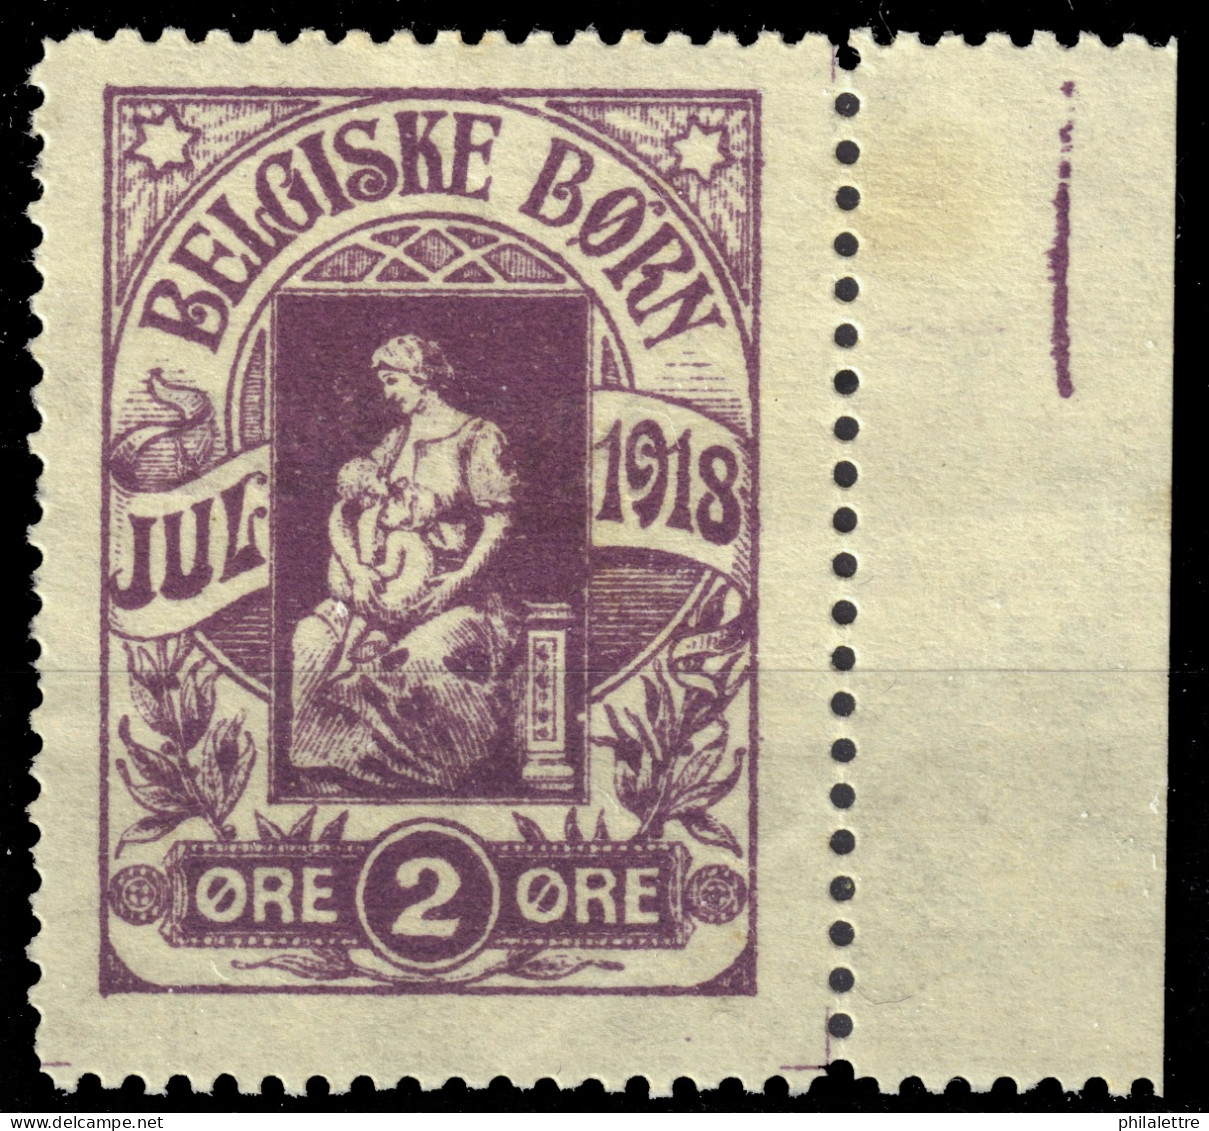 DANEMARK / DENMARK - Christmas 1918 - 2øre Purple "BELGISKE BØRN" (Belgian Children) Charity Stamp (marked NORGE On Gum) - Natale